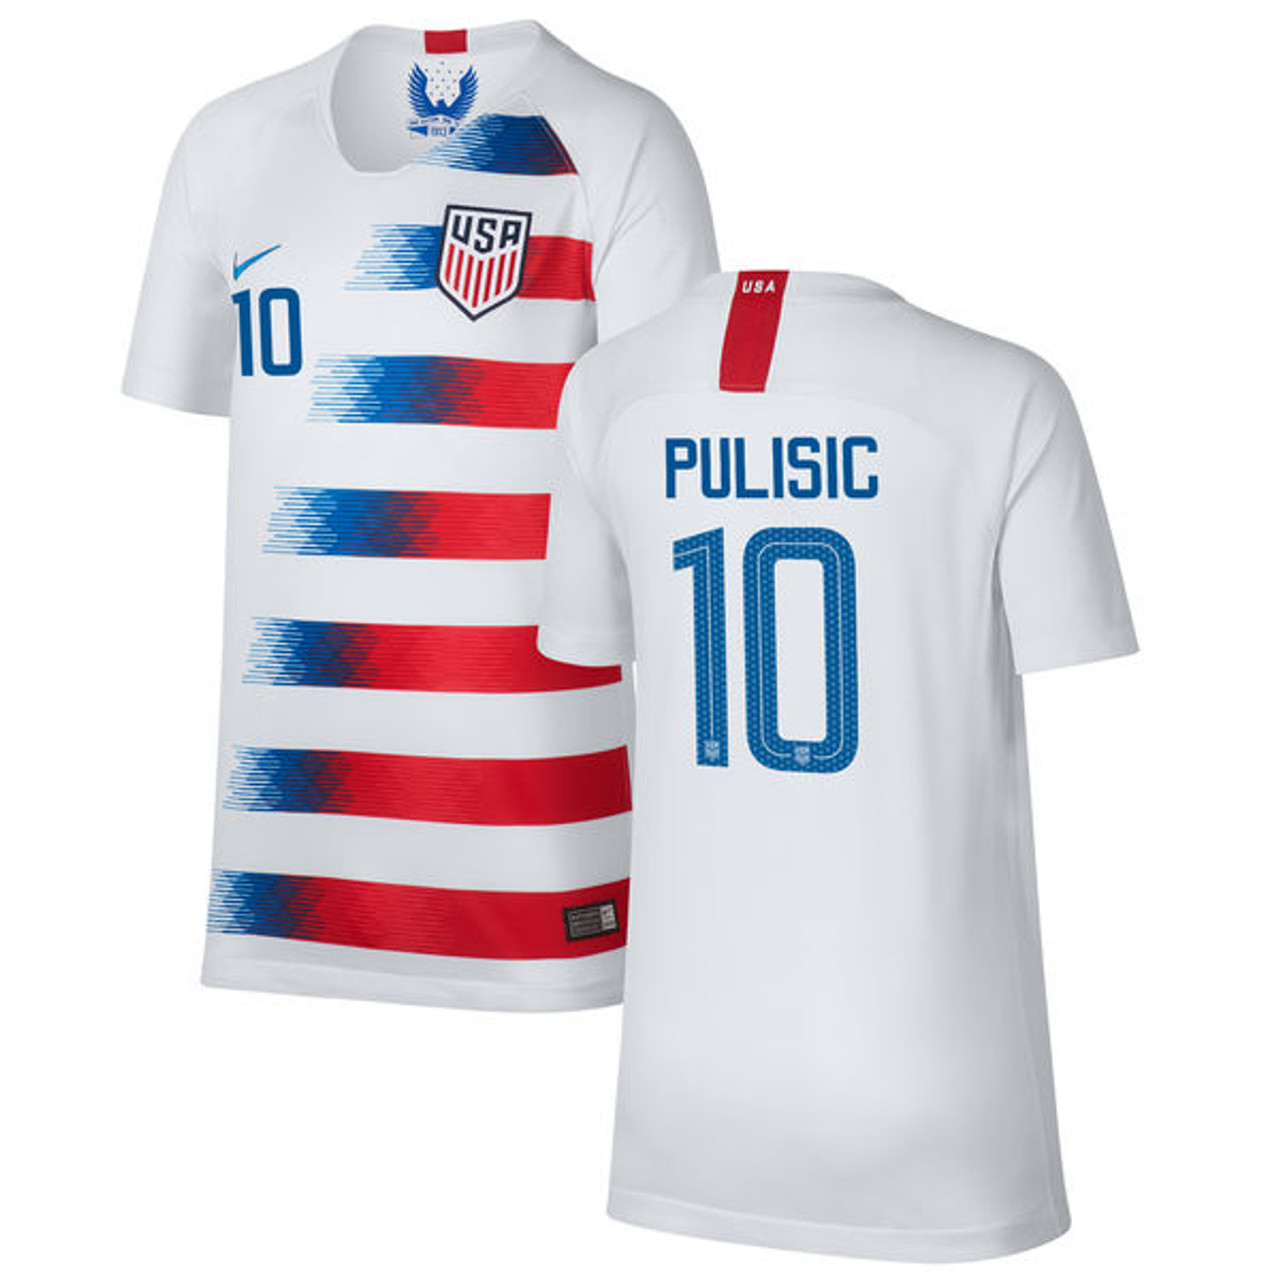 Categorie produceren belofte NIKE USA 2018 `PULISIC` HOME JERSEY - Soccer Plus